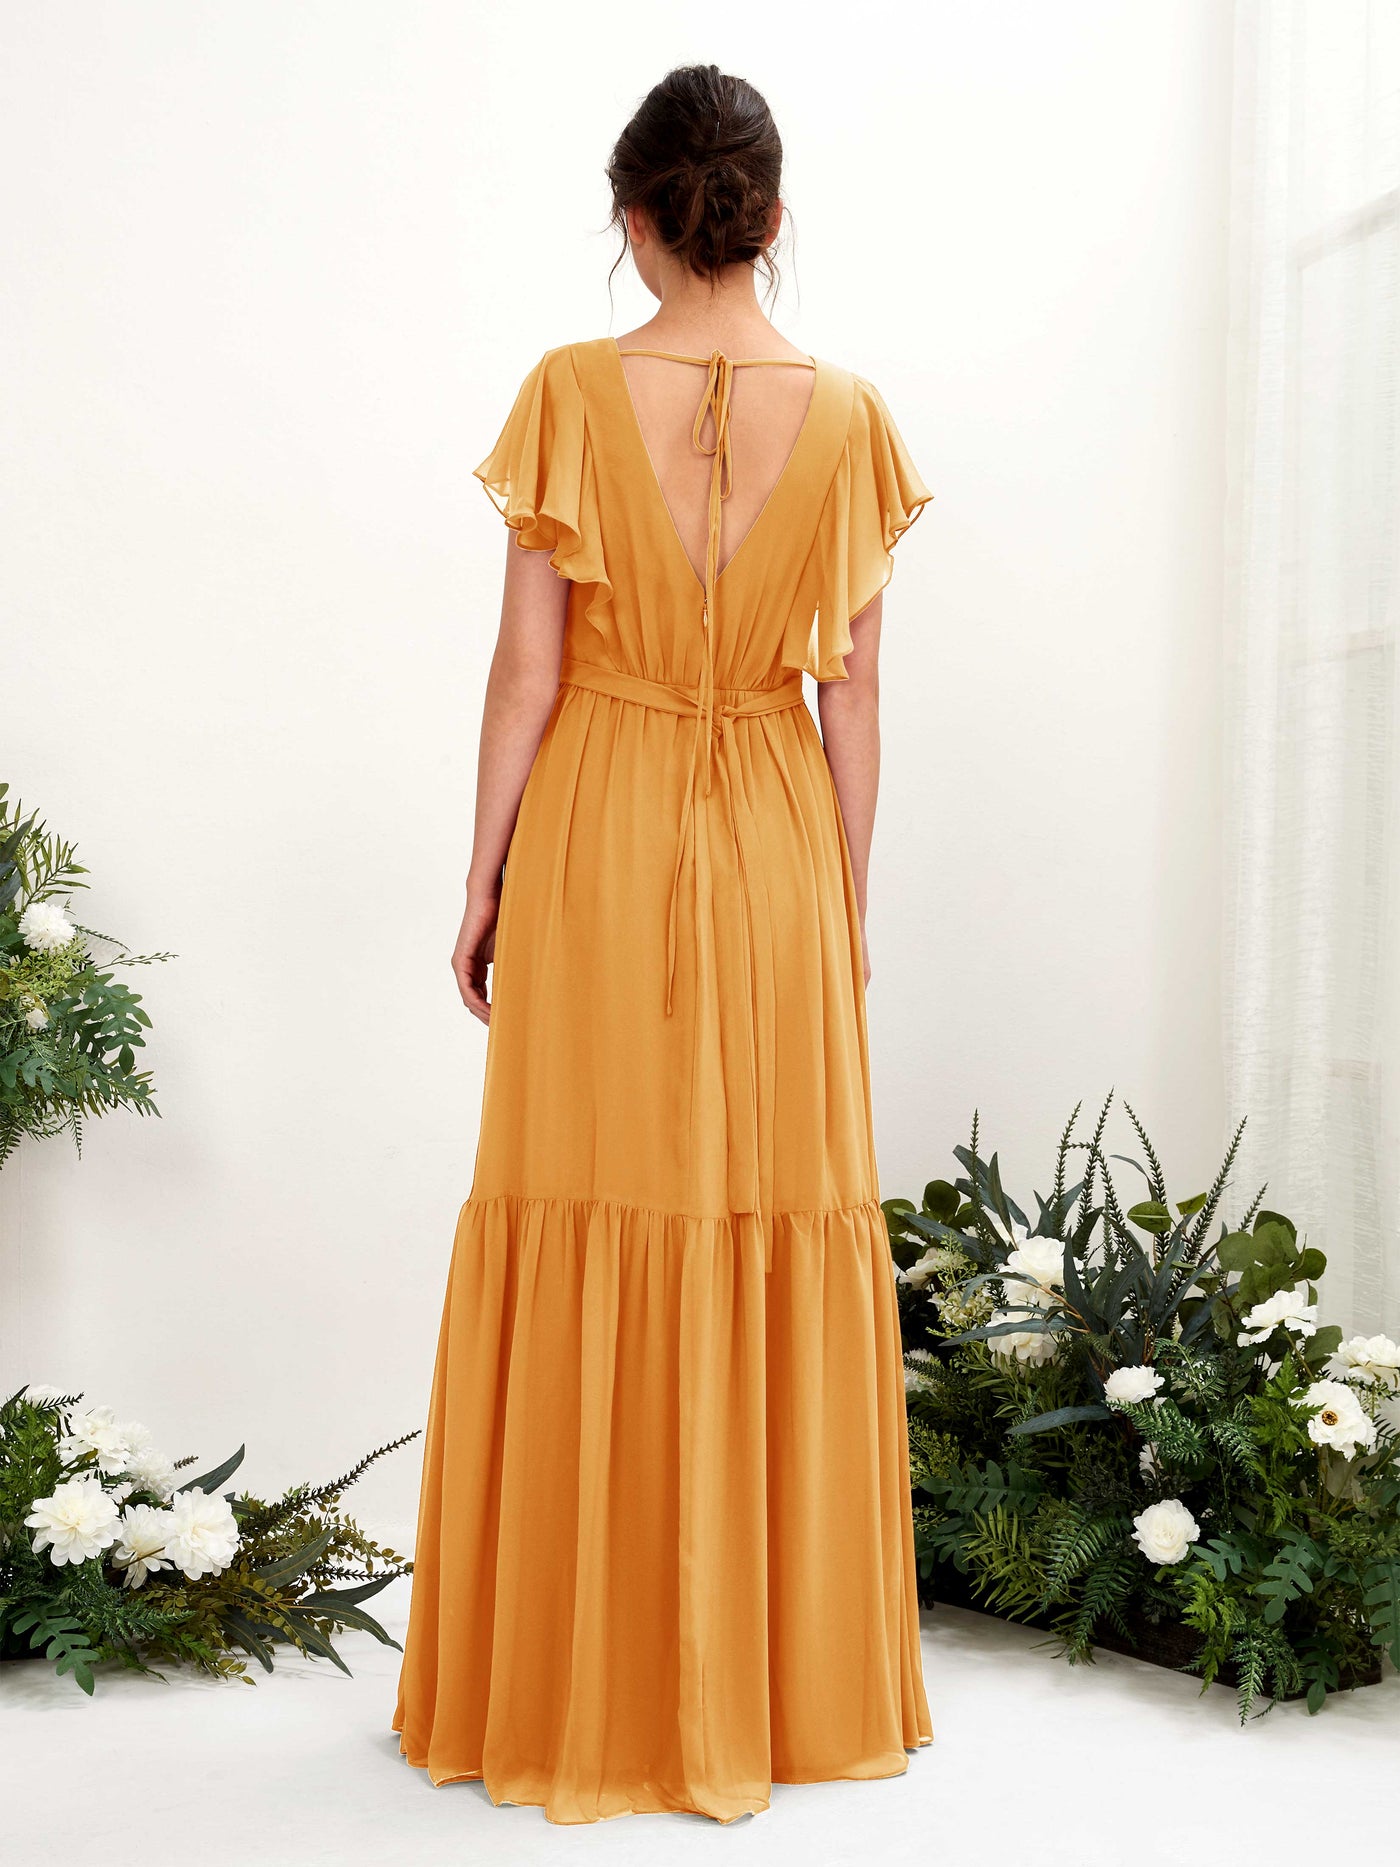 Mango Bridesmaid Dresses Bridesmaid Dress A-line Chiffon V-neck Full Length Short Sleeves Wedding Party Dress (81225902)#color_mango